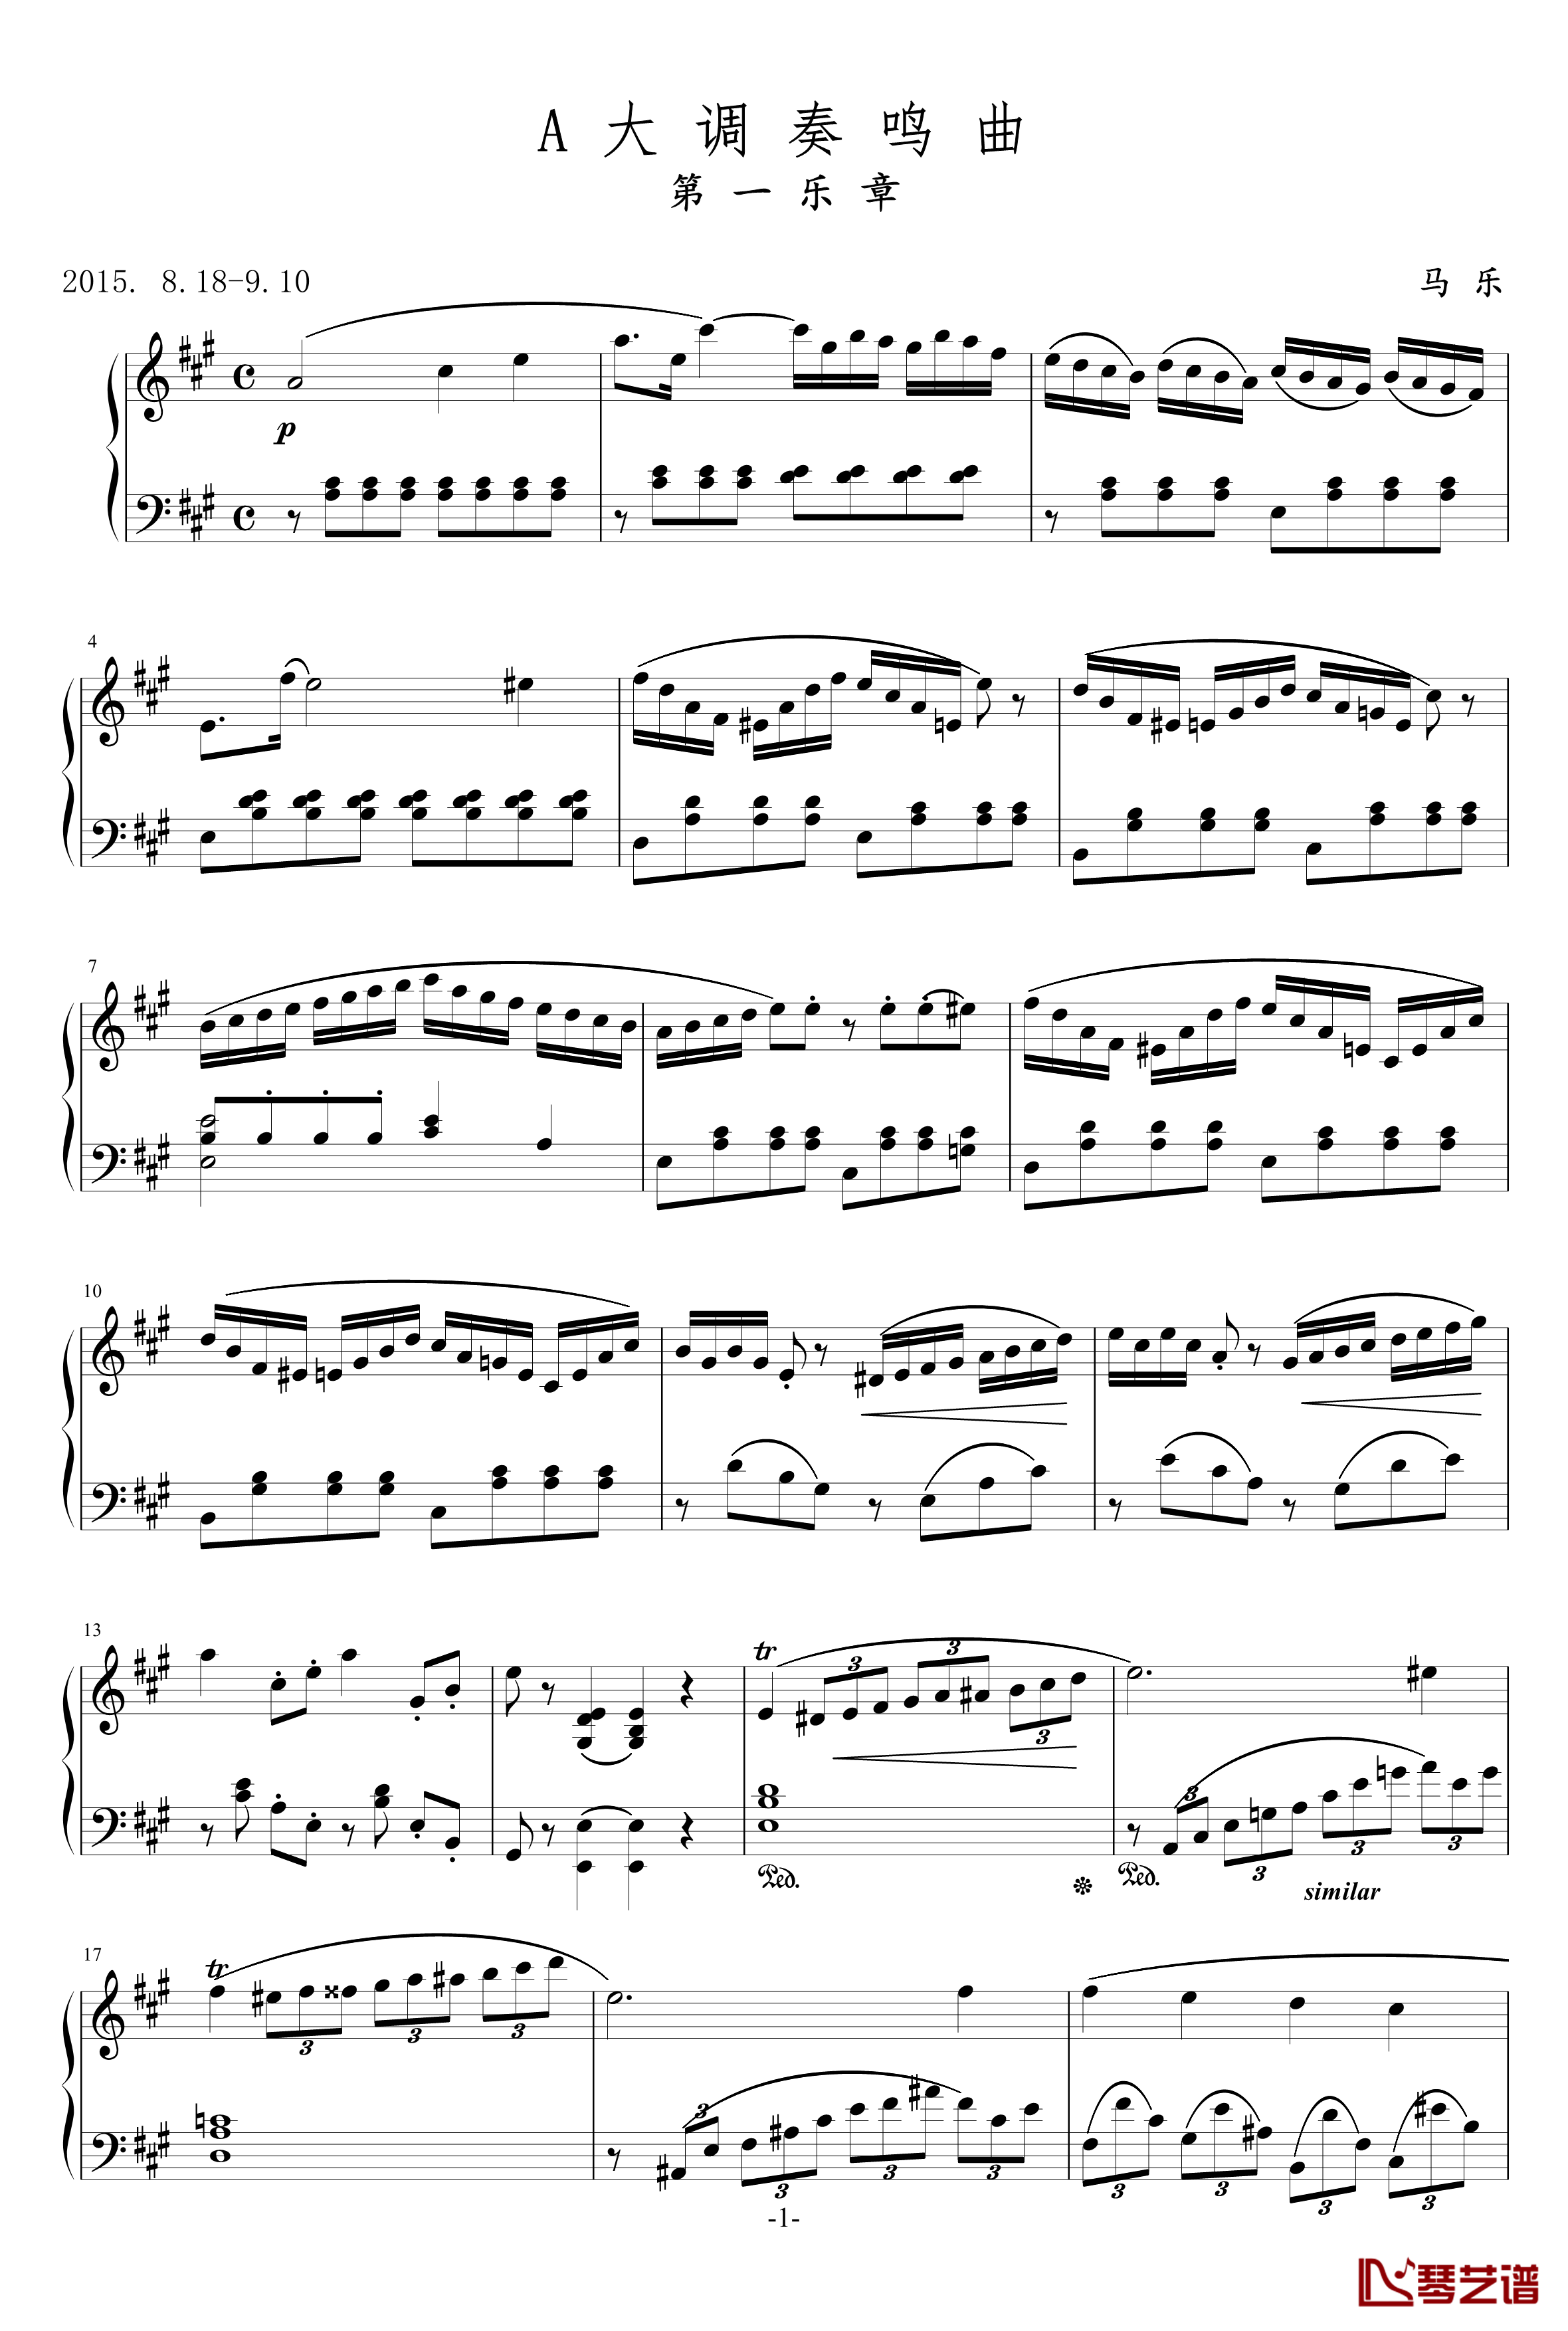 A大调奏鸣曲钢琴谱——第一乐章-乐之琴1